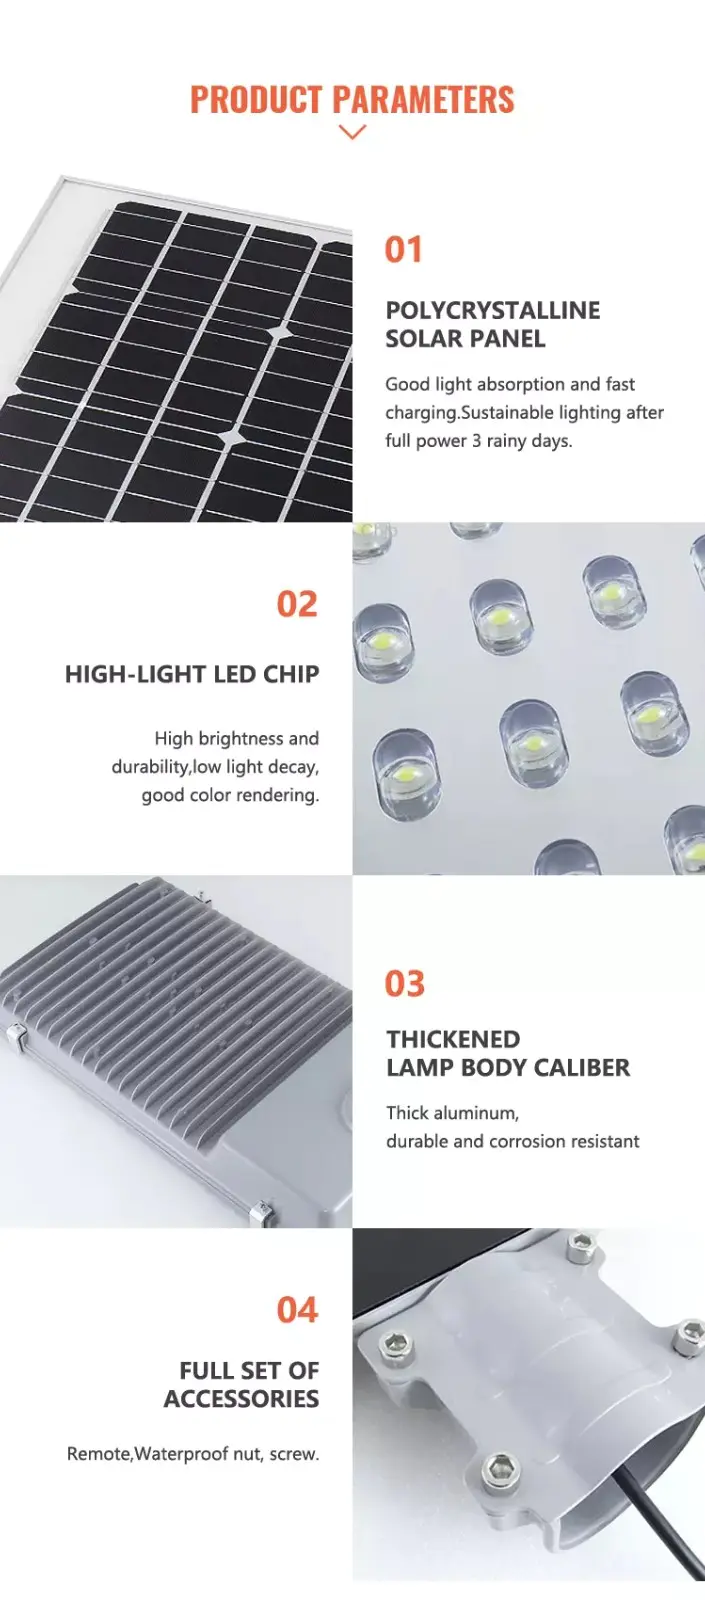 solar street lights for home project remote sensor Litel Technology Brand company